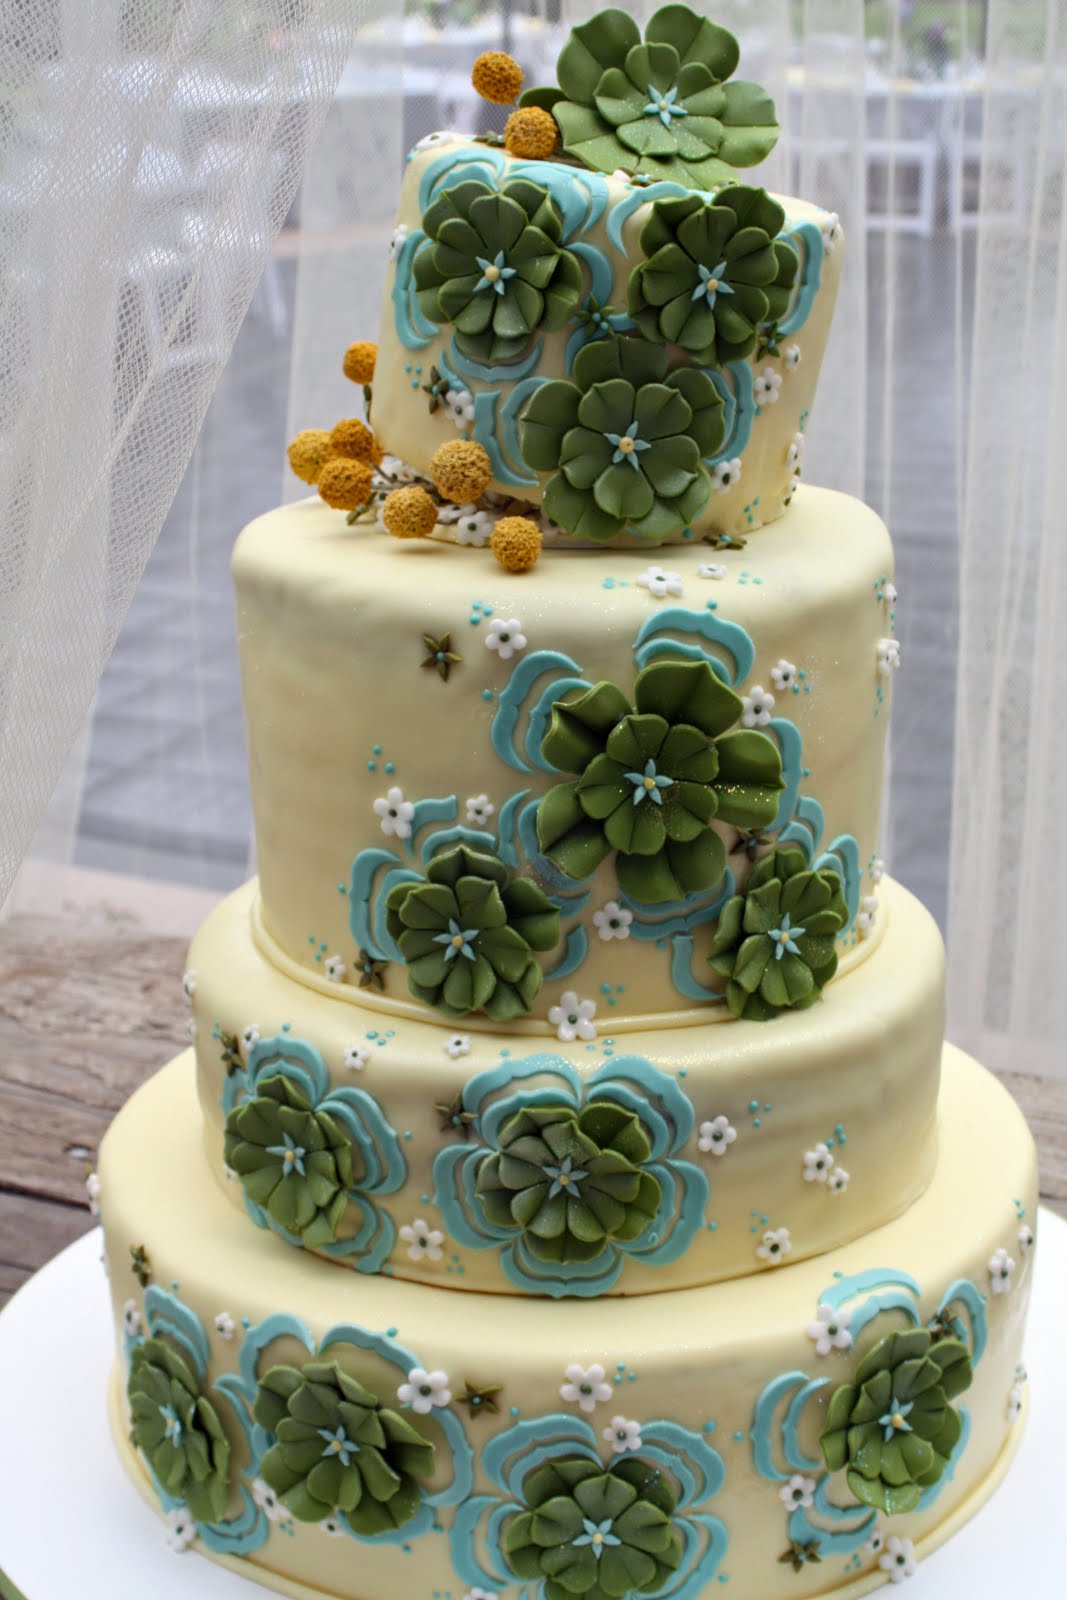 Pastries By Vreeke: Favorite Cake of the Wedding Season ...